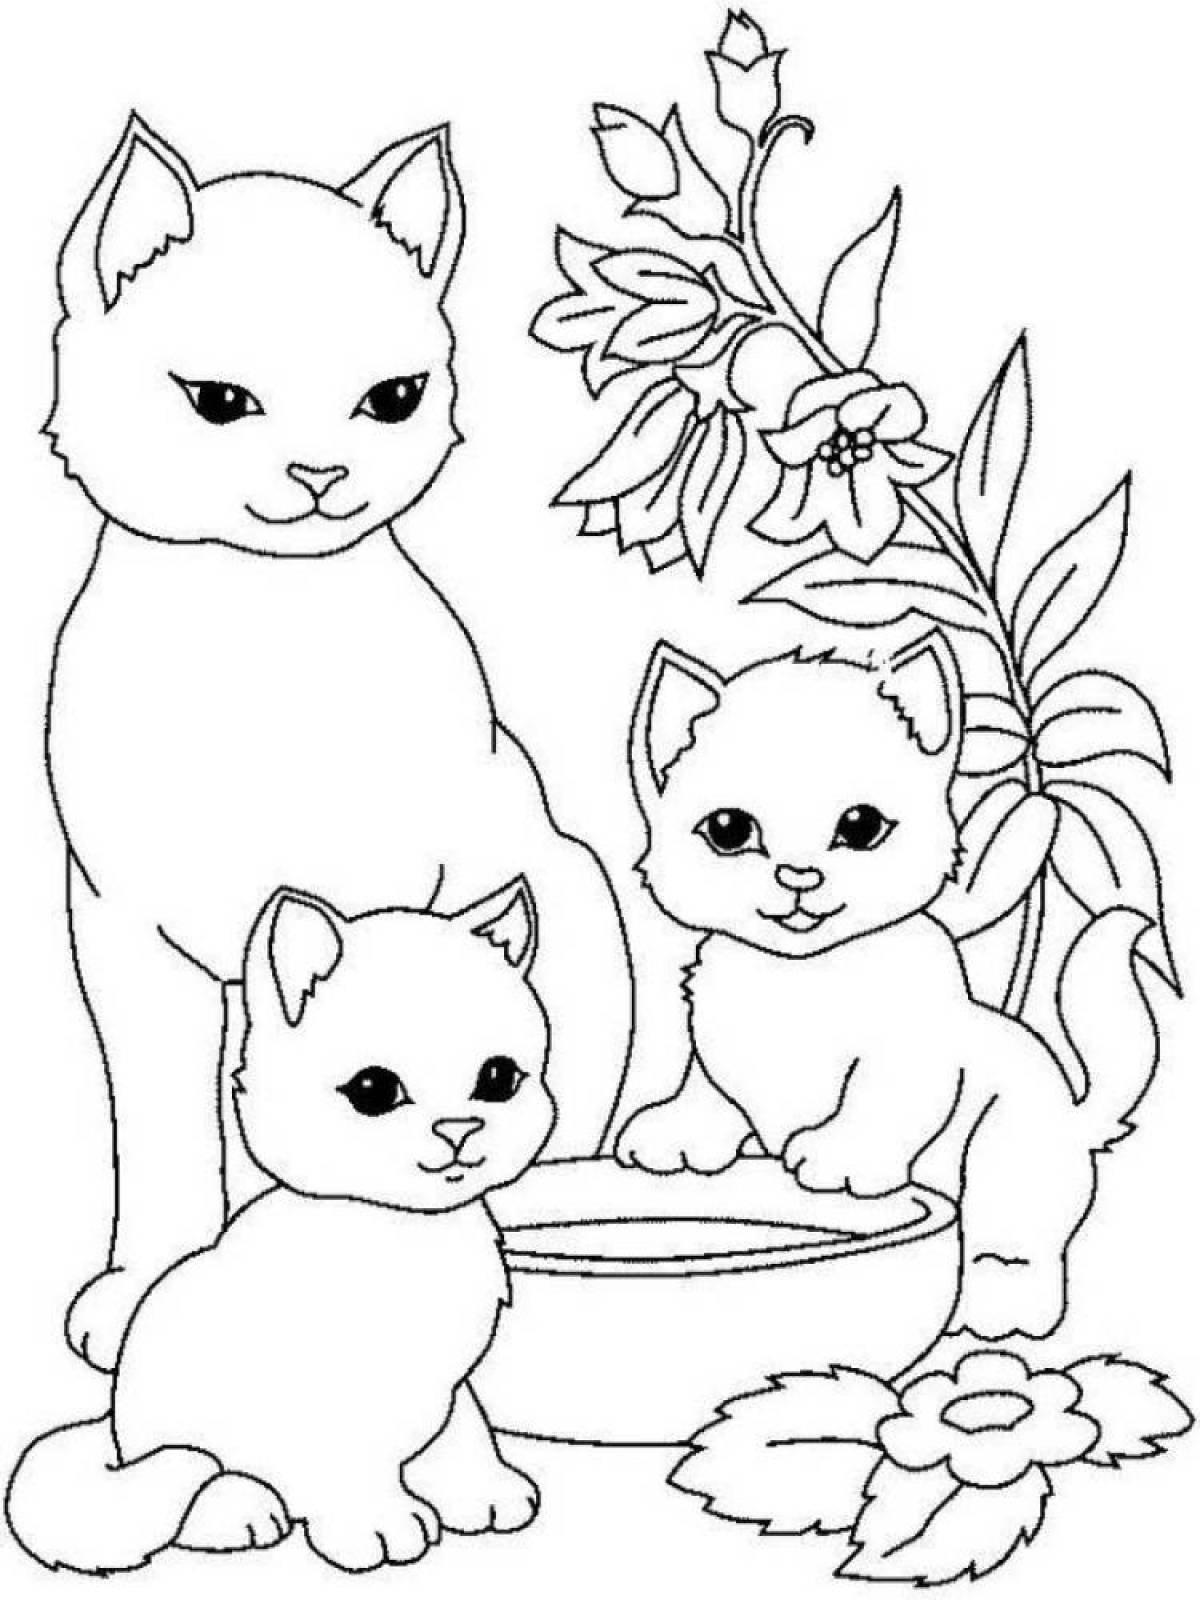 Live kitten coloring for kids